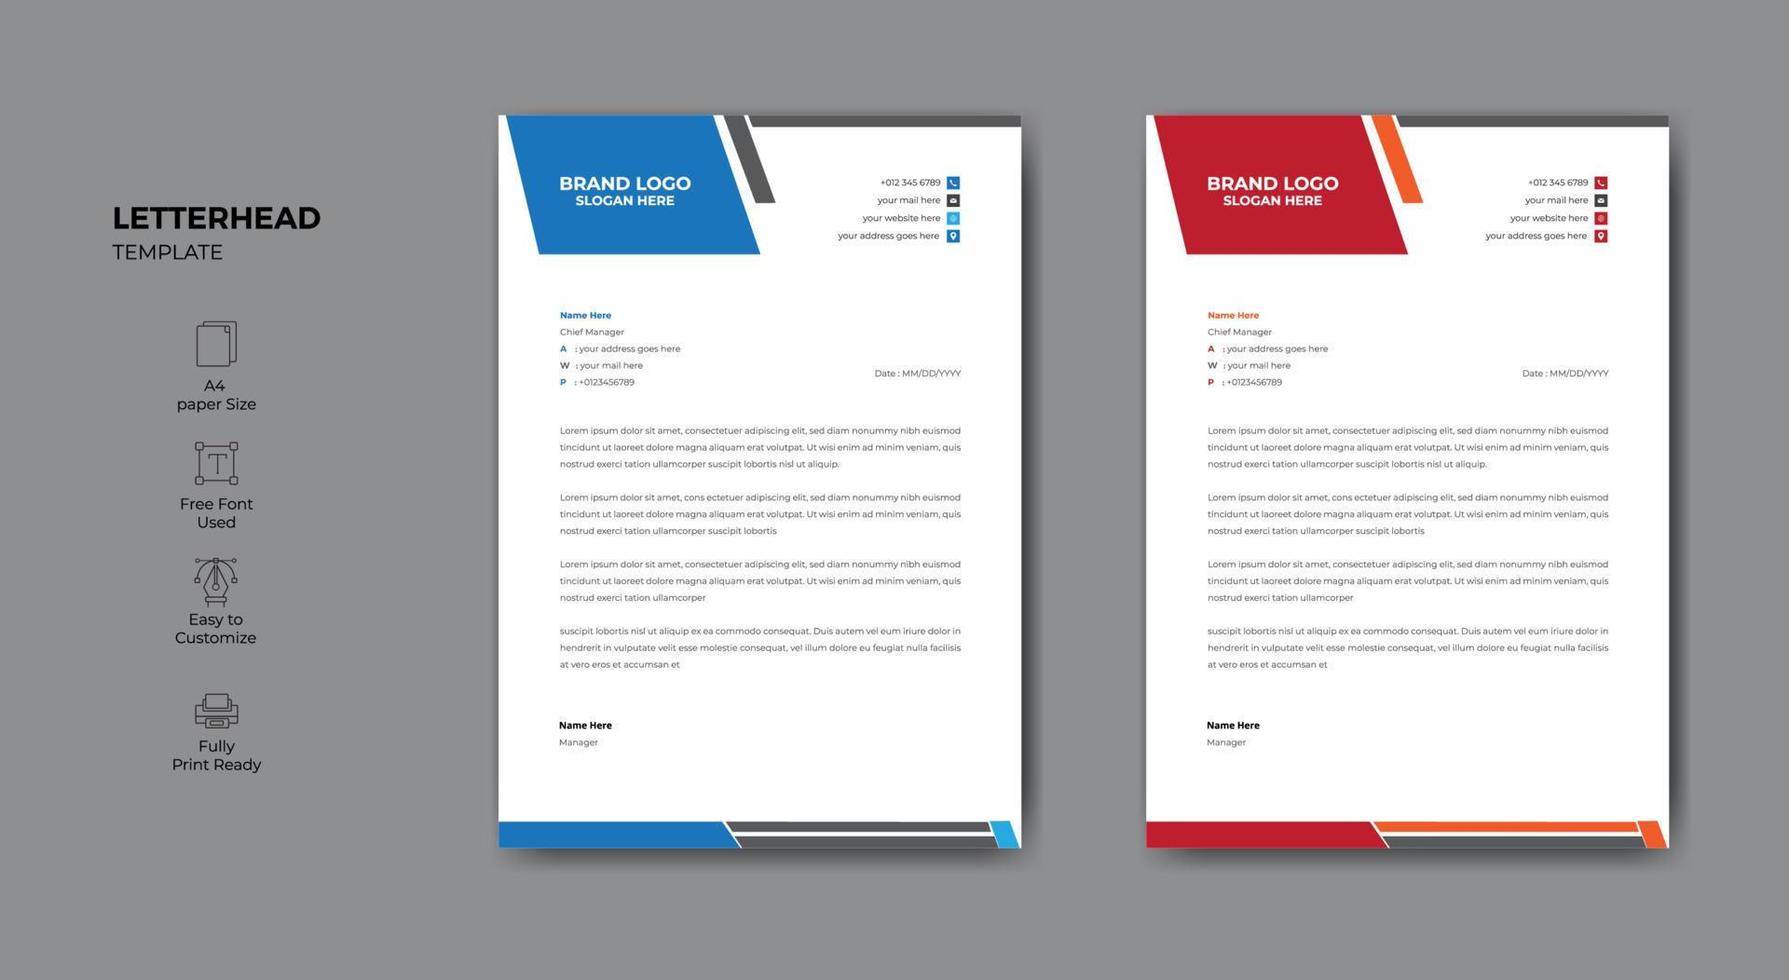 Minimalist style letterhead design for your business. Letterhead design for your business or project. vector